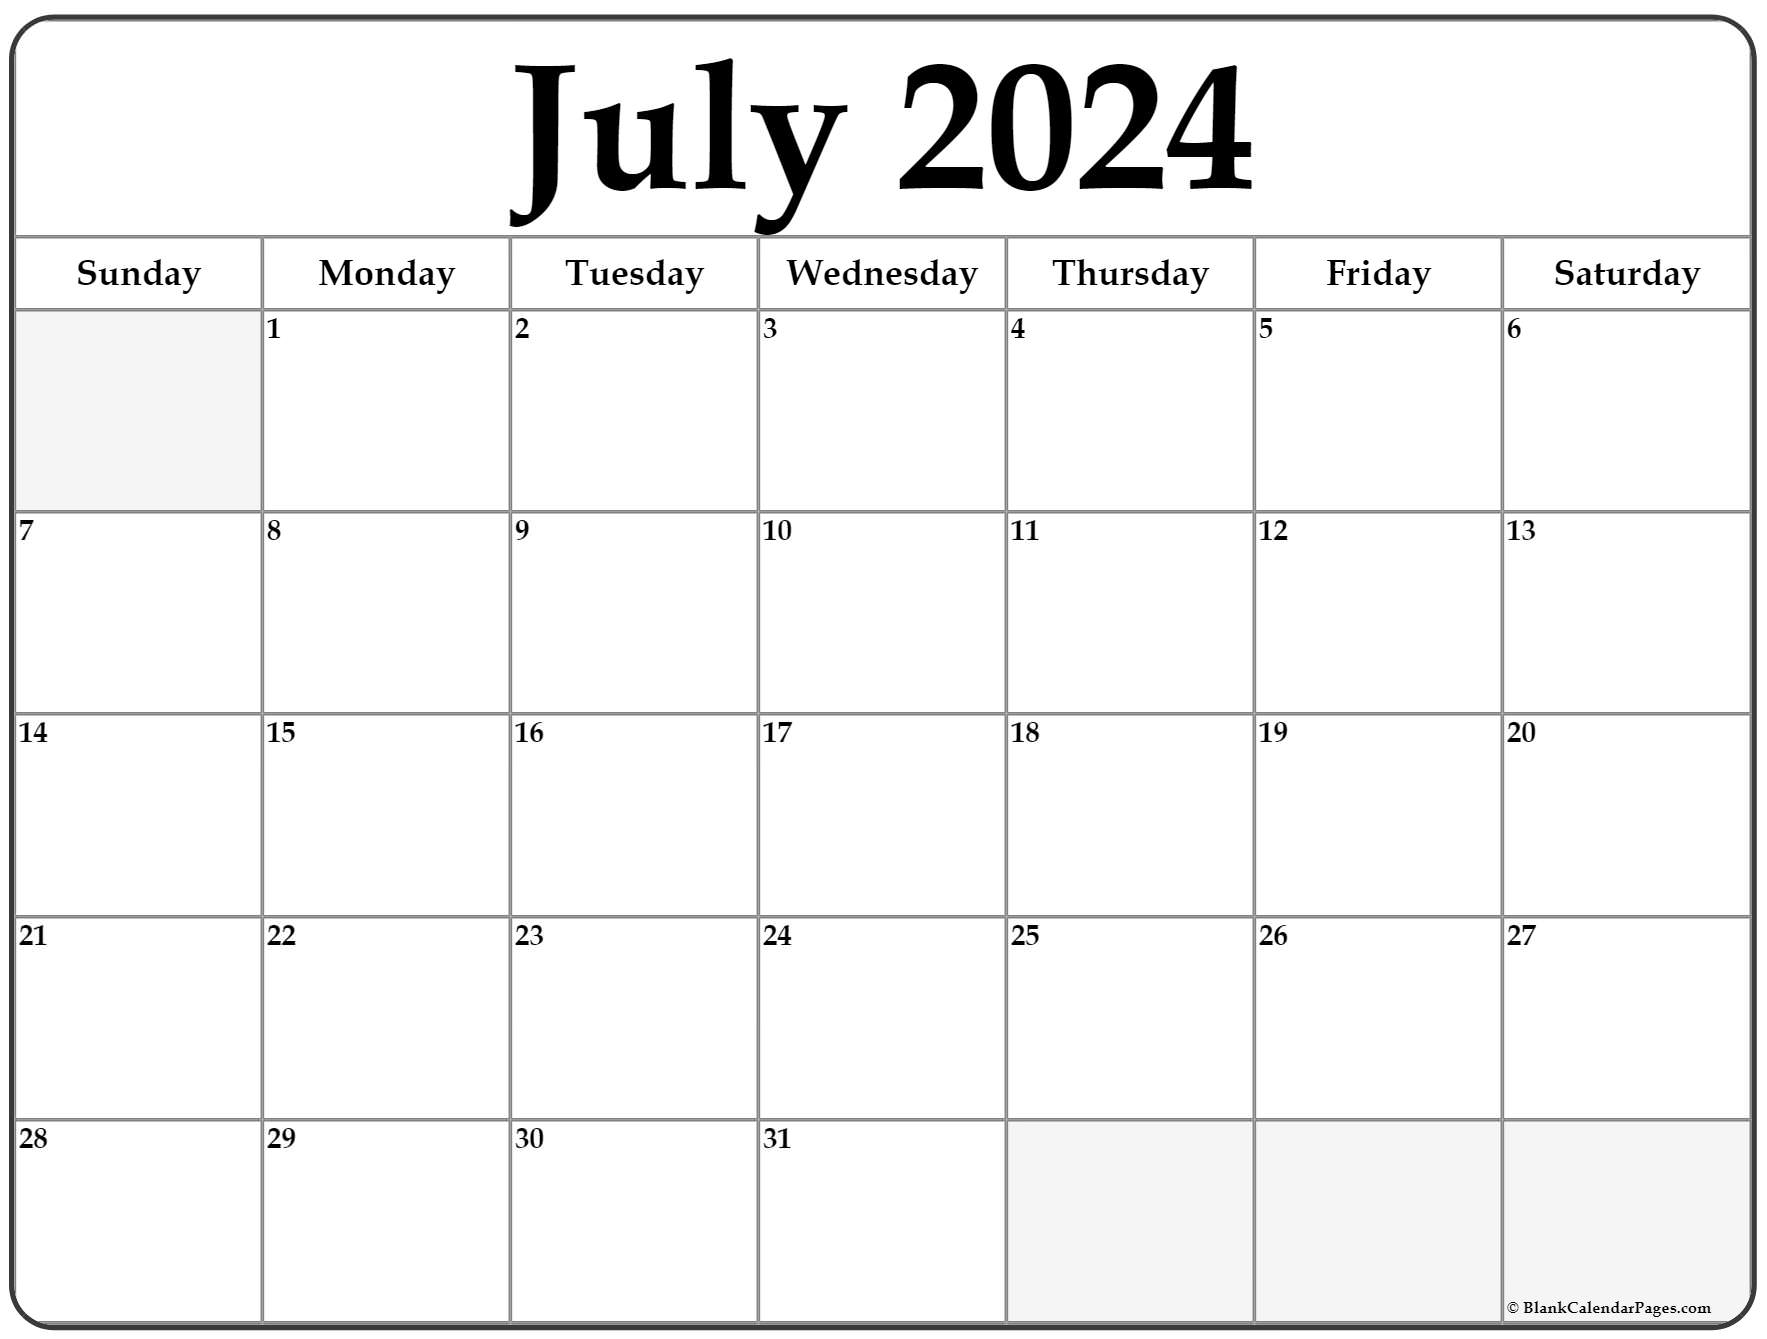 July 2024 Calendar | Free Printable Calendar for Printable Summer Calendar 2024